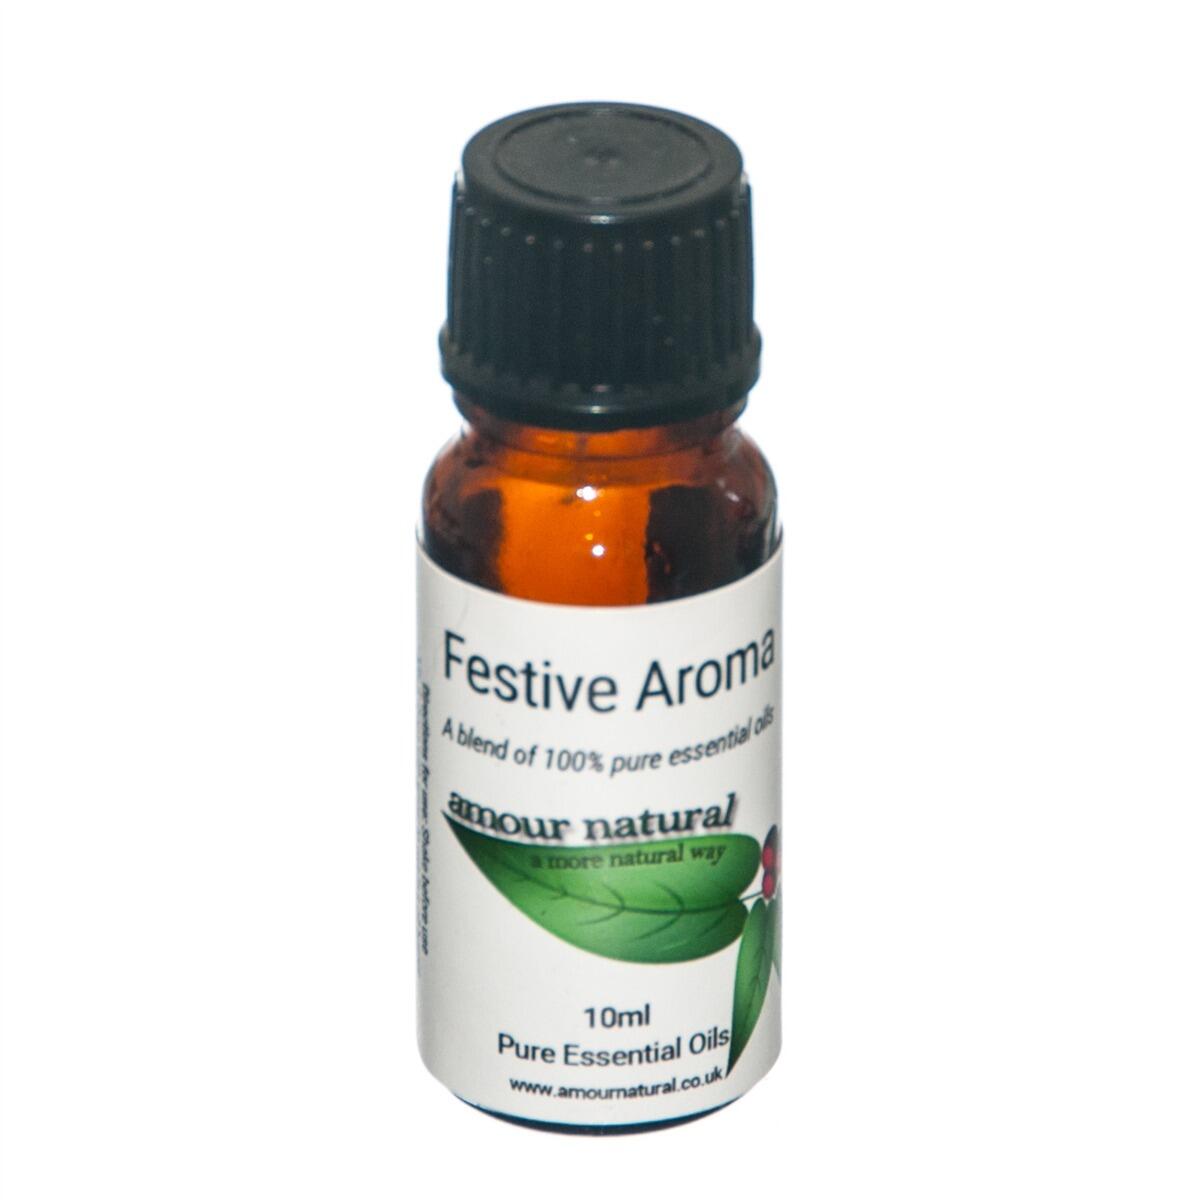 Festive Aroma Oil